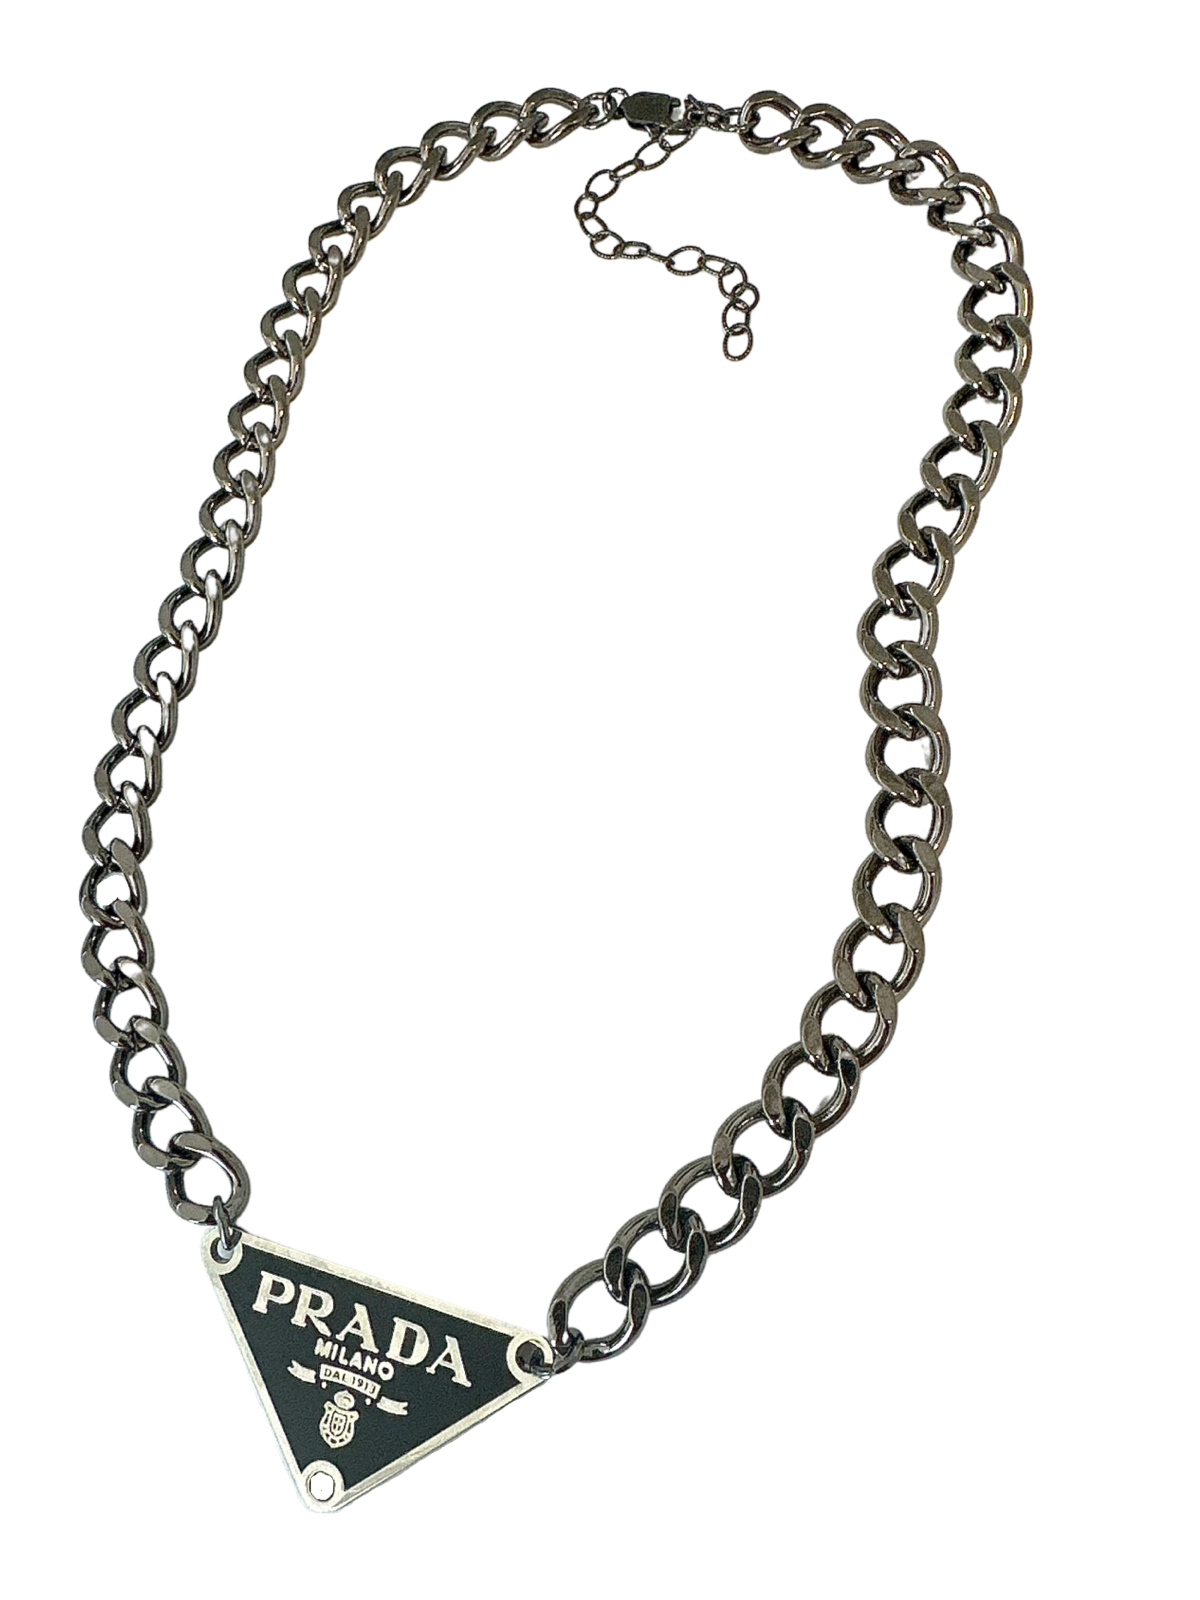 P-RAD Black on Black Tag Necklace